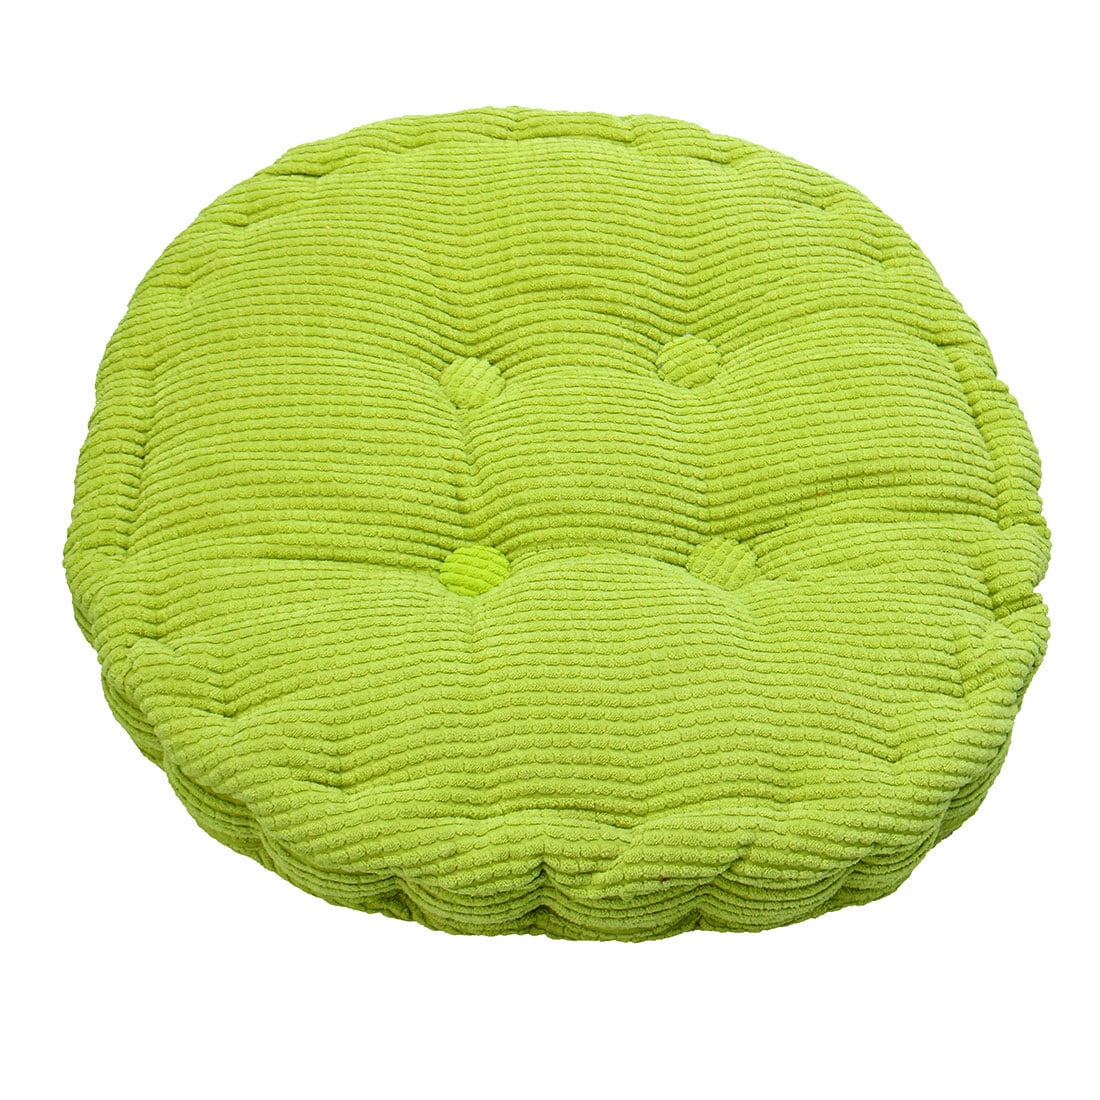 Details about   Household Corduroy Chair Cushion Thick Non-slip Cotton Cushion Pillow 